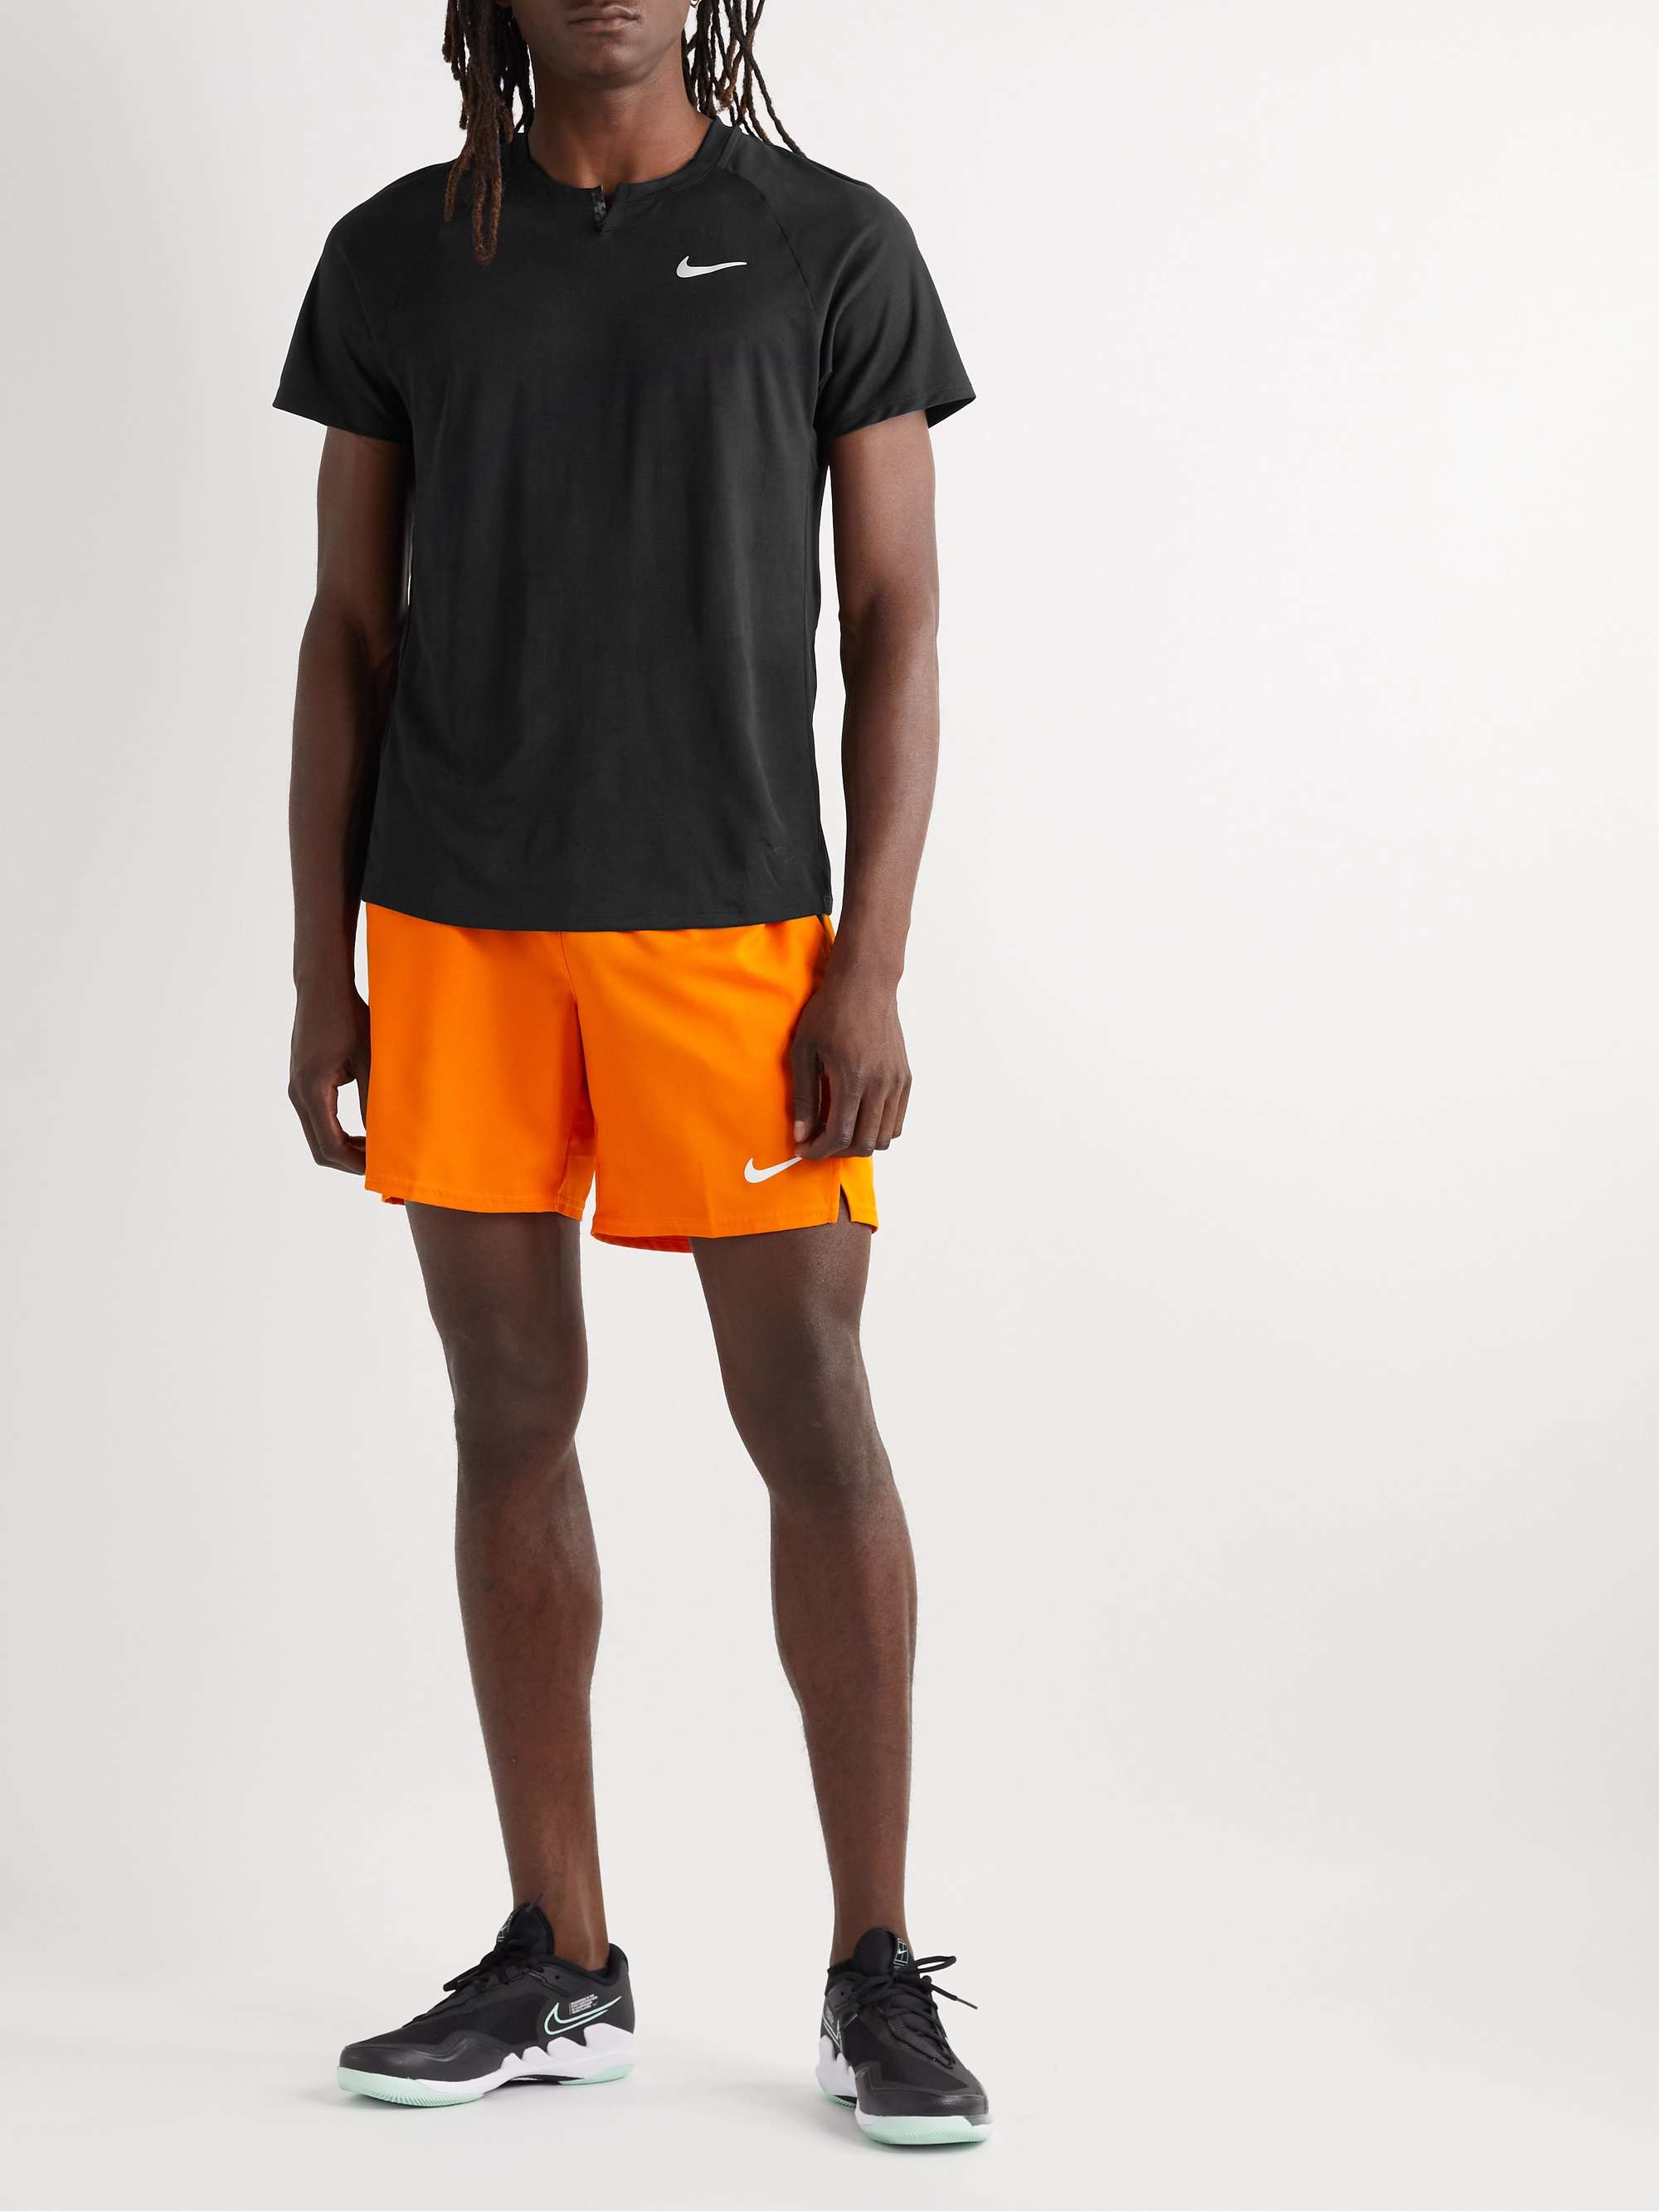 NIKE TENNIS NikeCourt Slam Slim-Fit Dri-FIT Tennis Shirt | MR PORTER